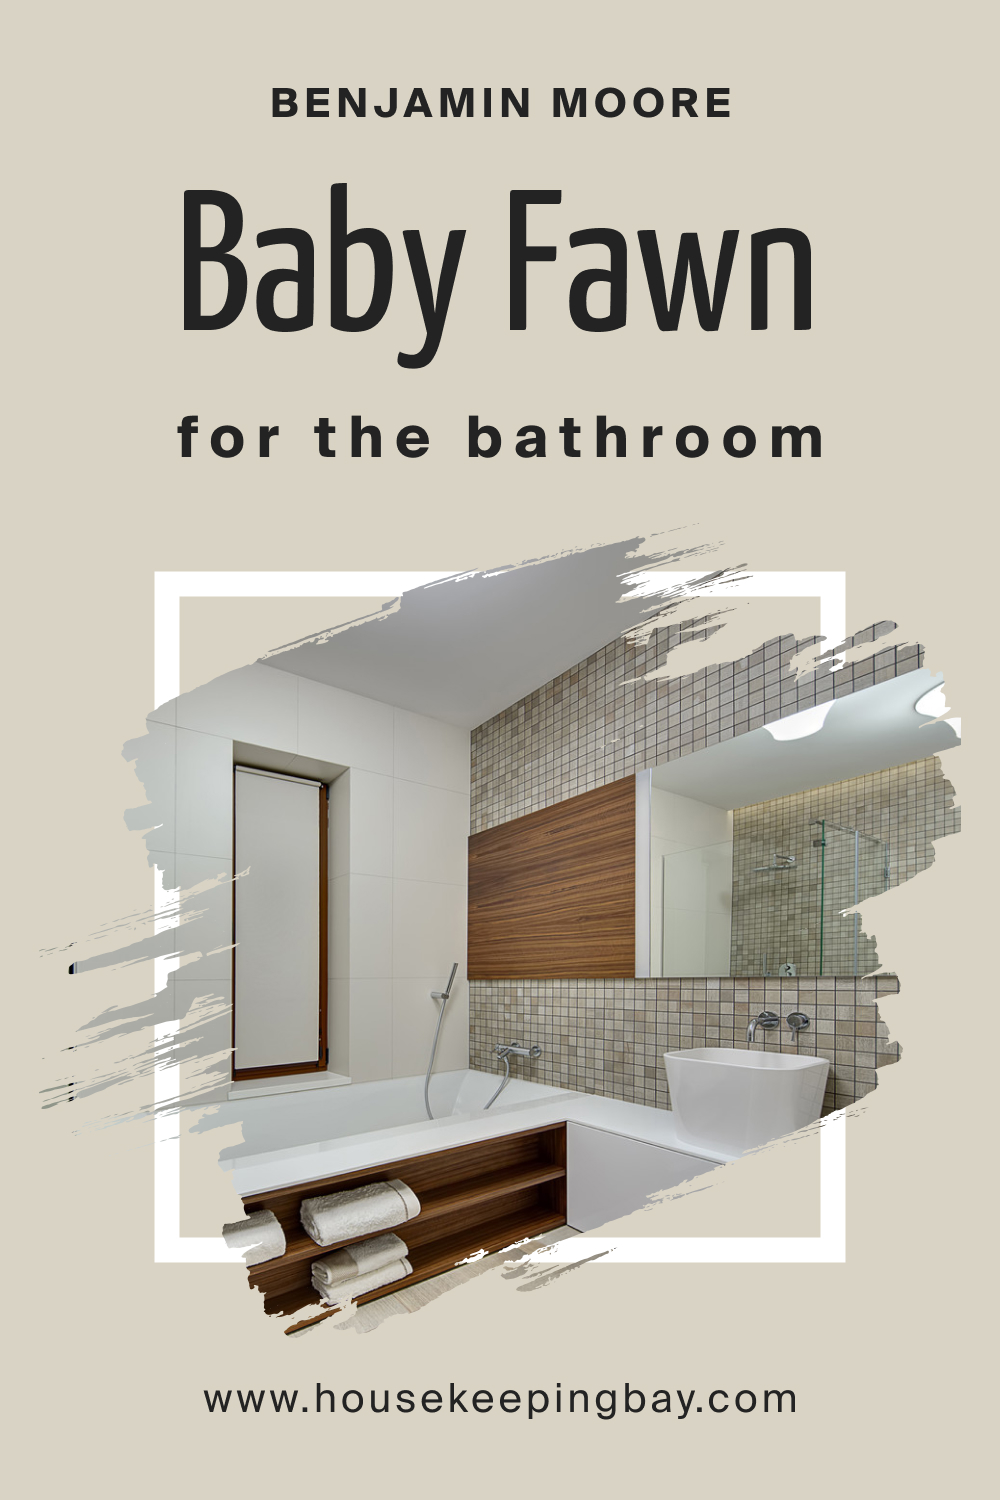 Benjamin Moore. Baby Fawn OC 15 for the Bathroom